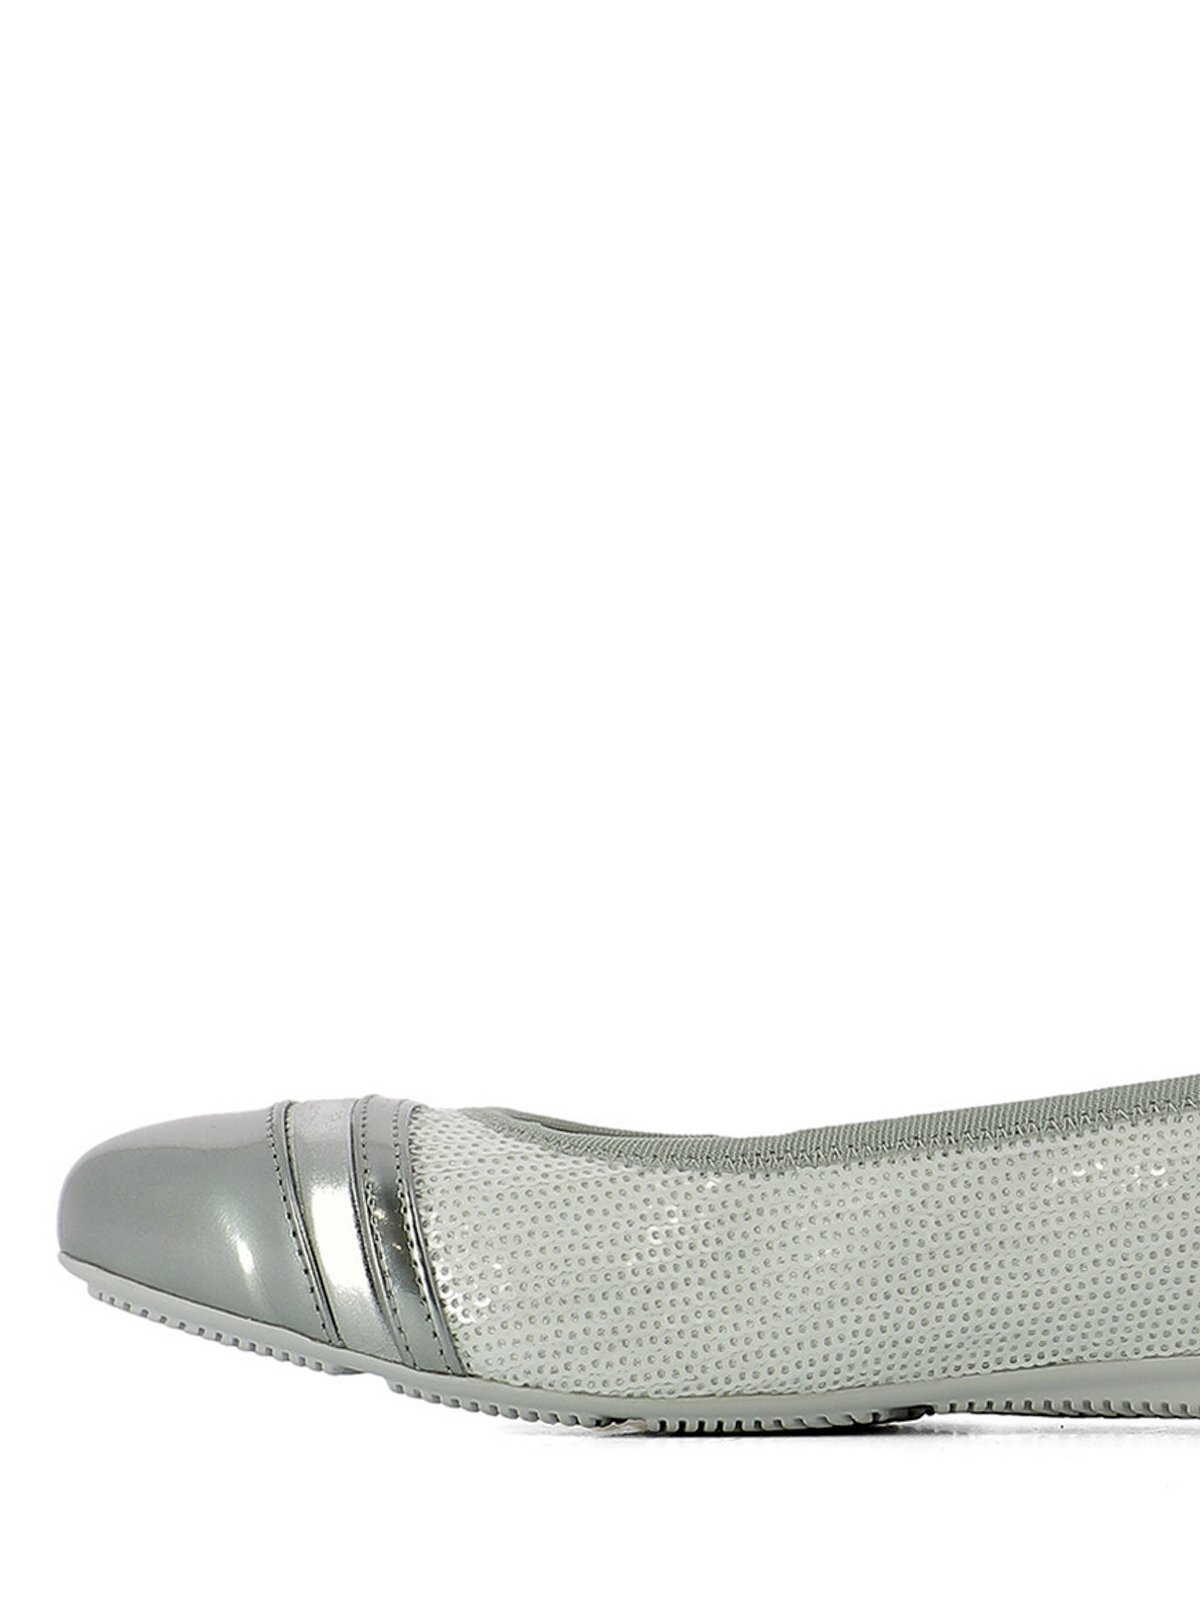 Rationalisatie Welsprekend Verlichting Flat shoes Hogan - Wrap H144 ballerinas - HXW1440M861G8A0351 | iKRIX.com